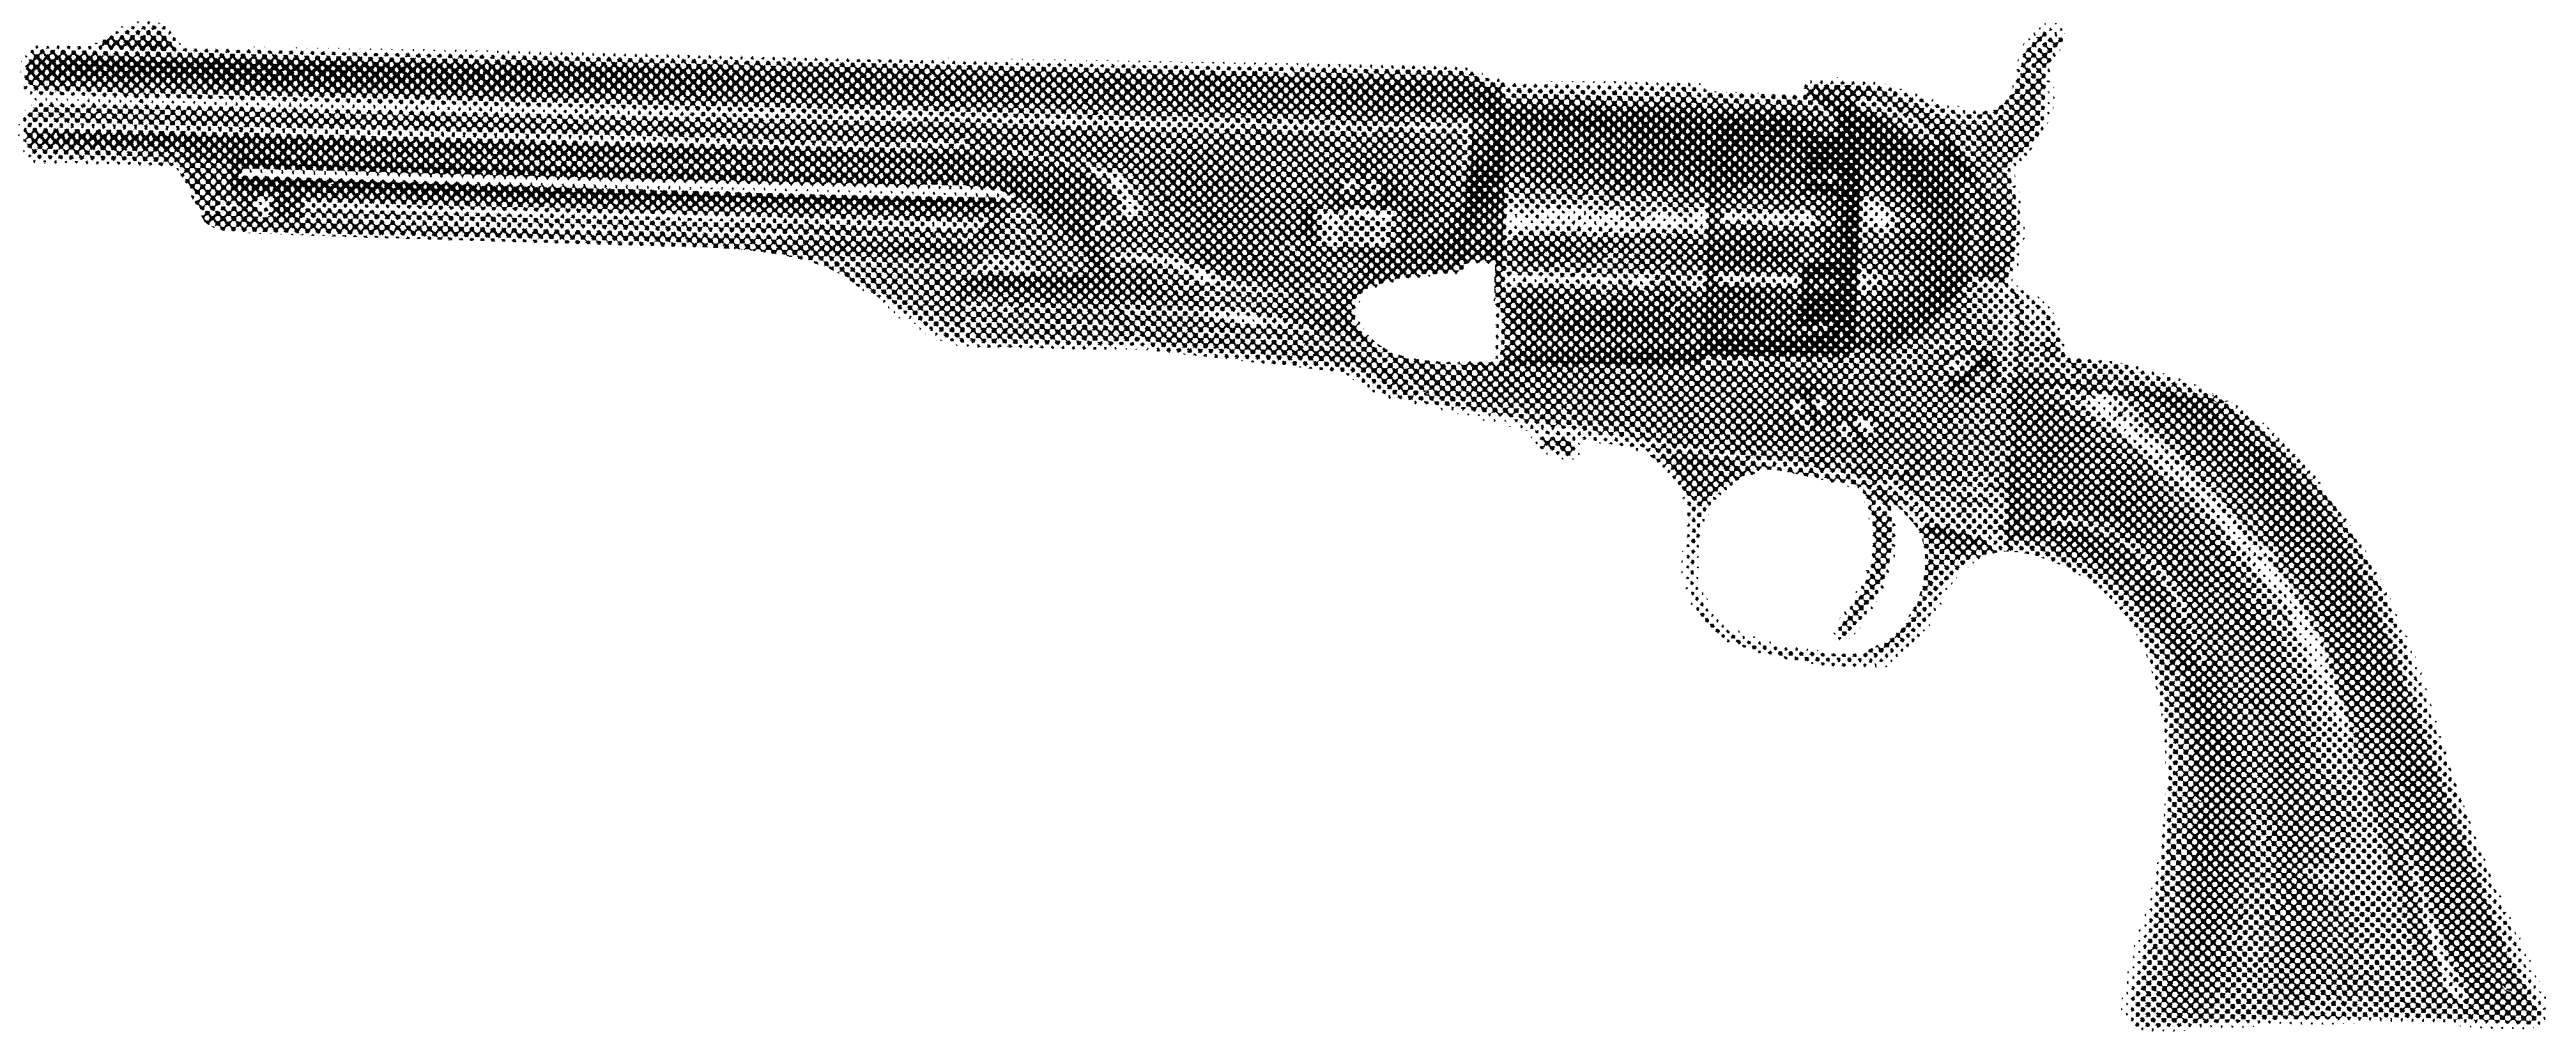 Model 1860 Army Revolver